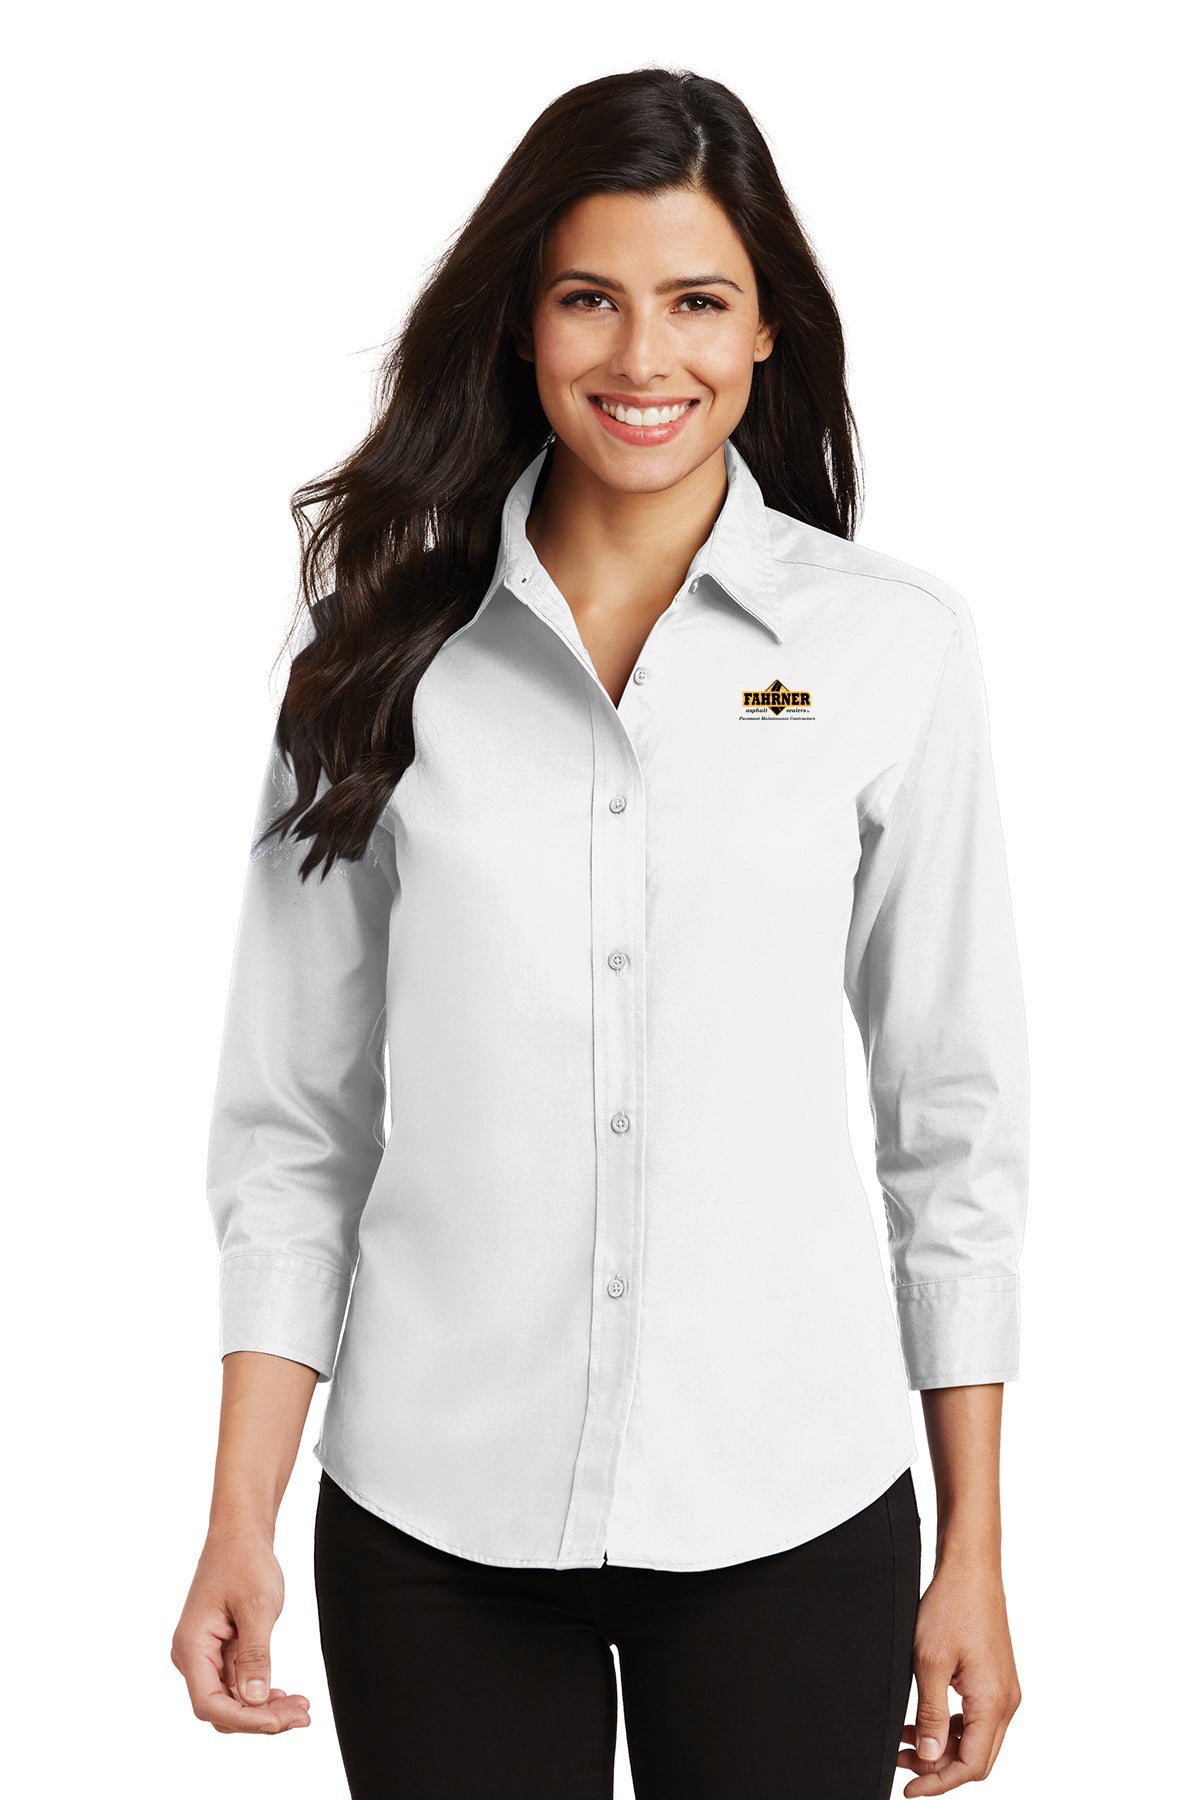 Fahrner Asphalt Ladies Button Up Shirt